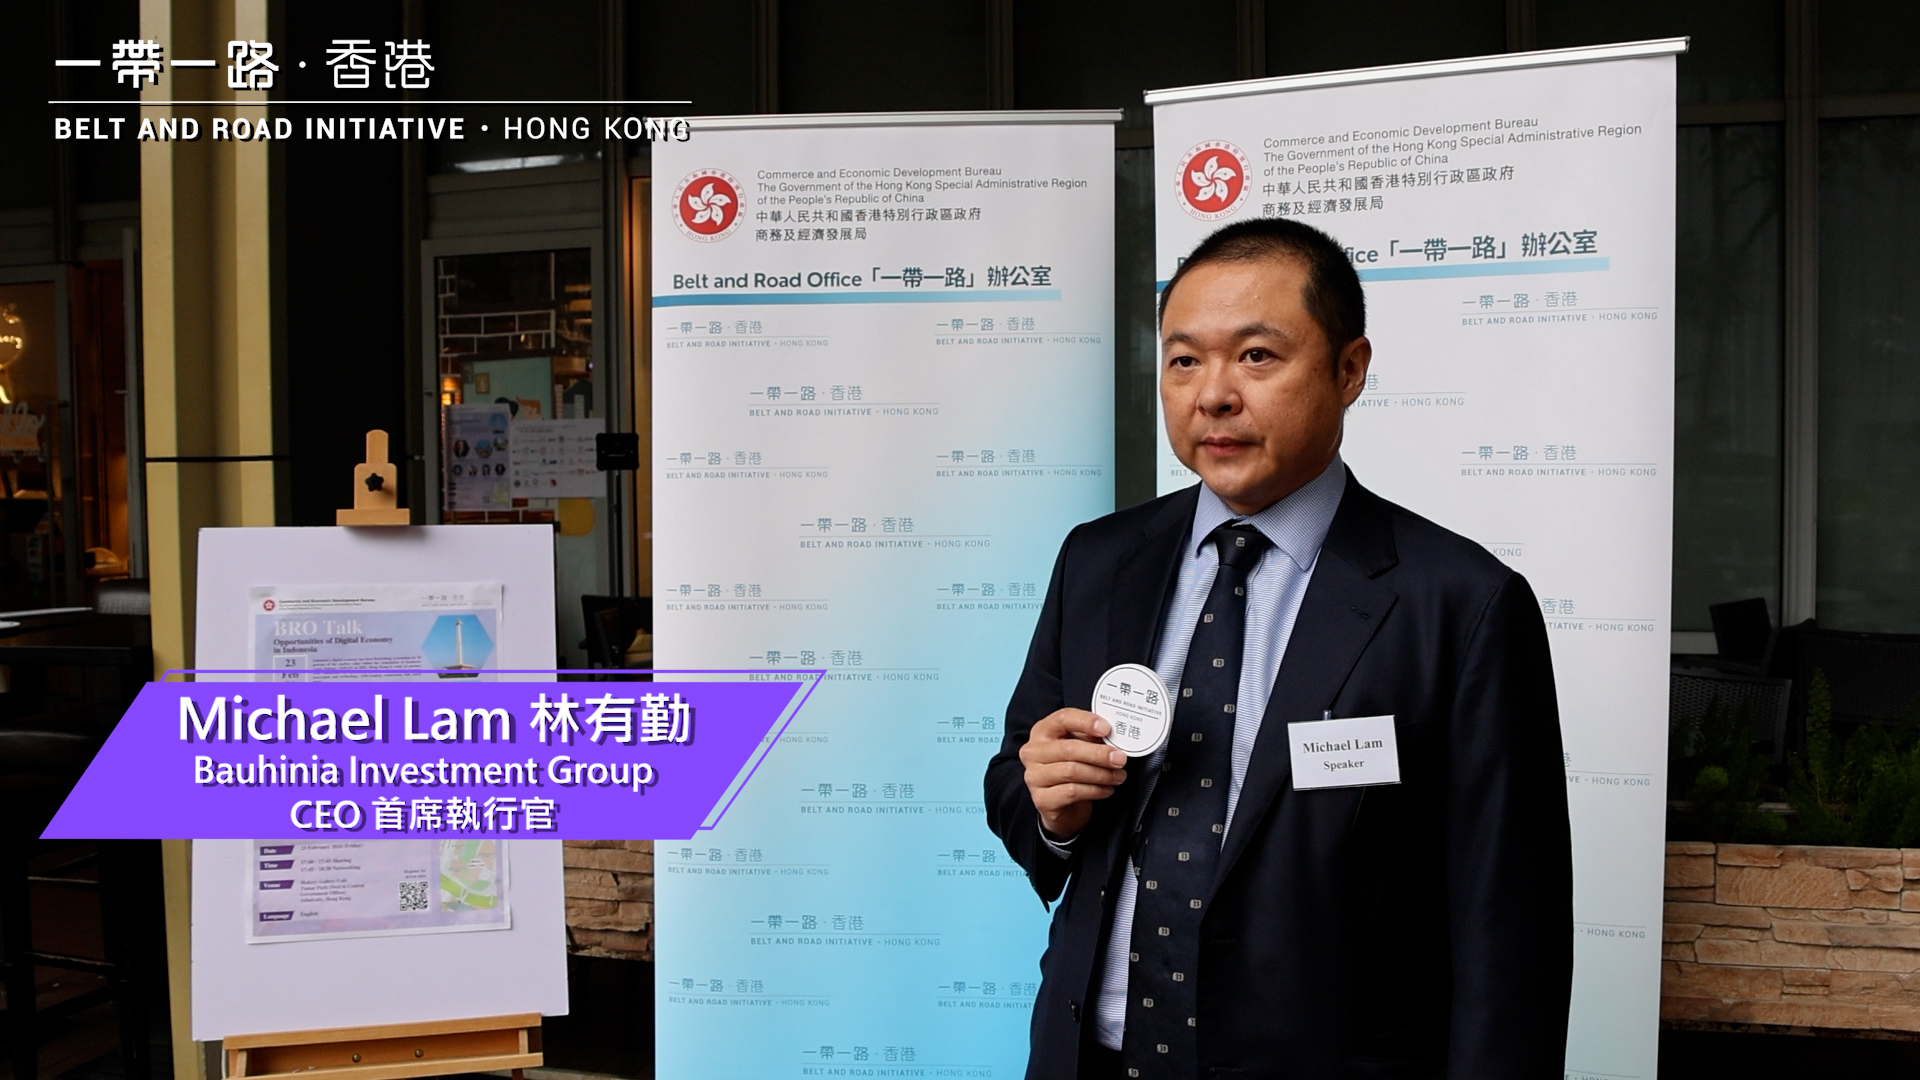 Interview Mr Michael Lam